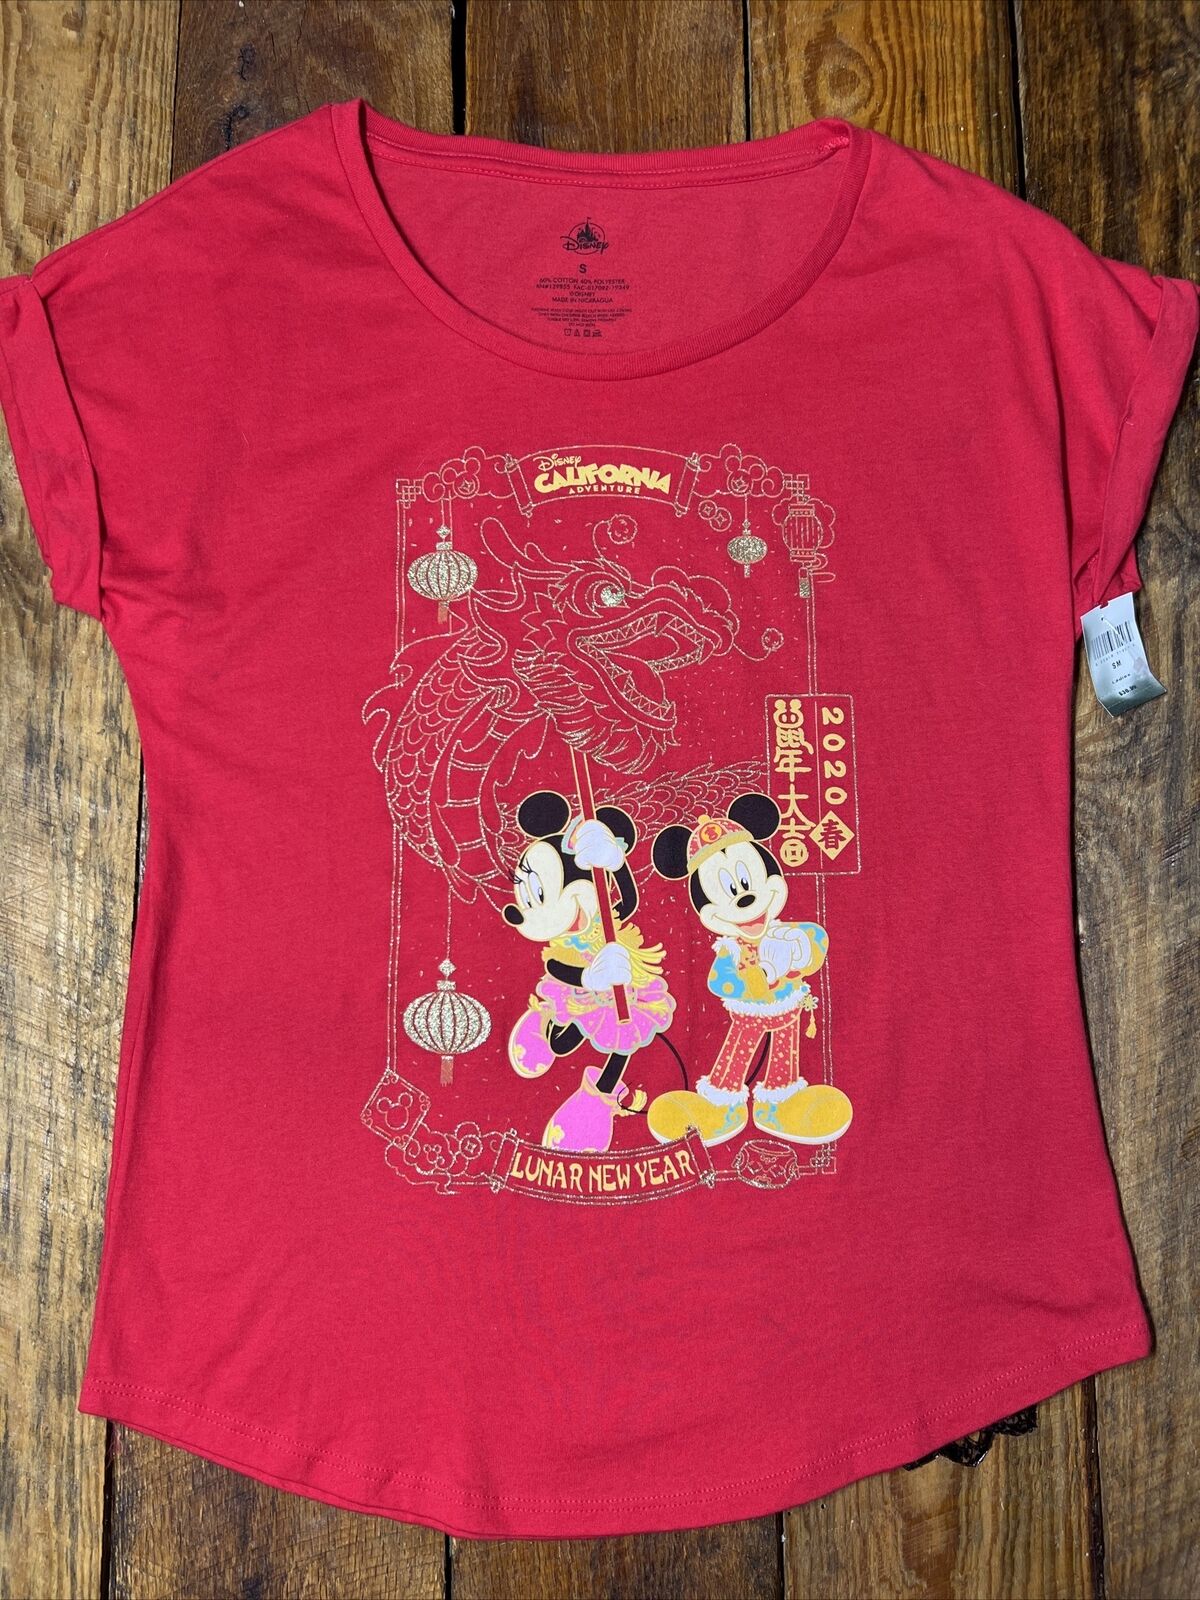 Disney California Adventure Chinese Lunar New Year Small Women Shirt 2020 Mickey